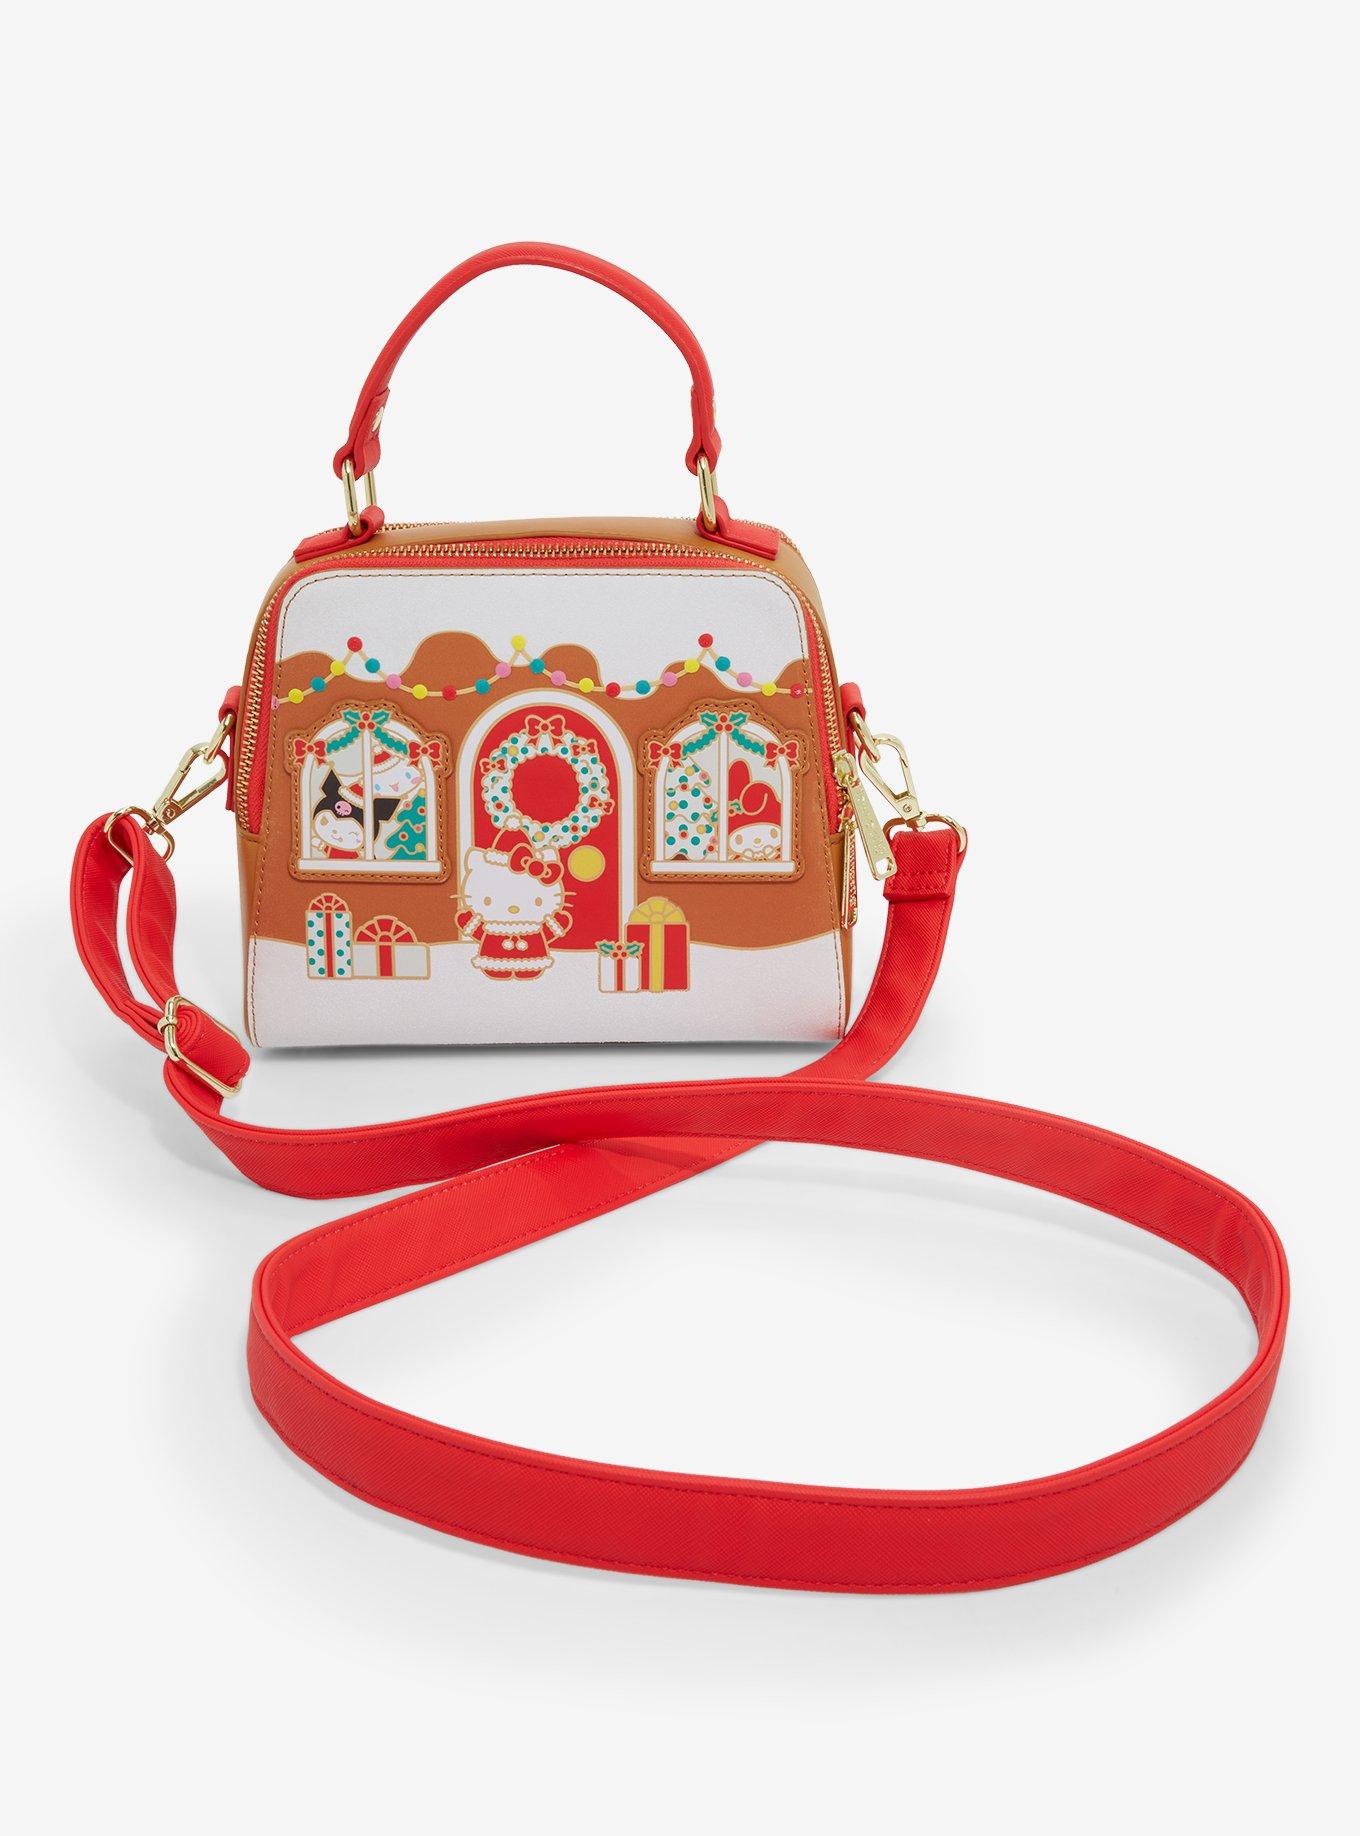 Sanrio Hello Kitty Head Shaped Lunch Bag Red Bow - Curious Bazaar